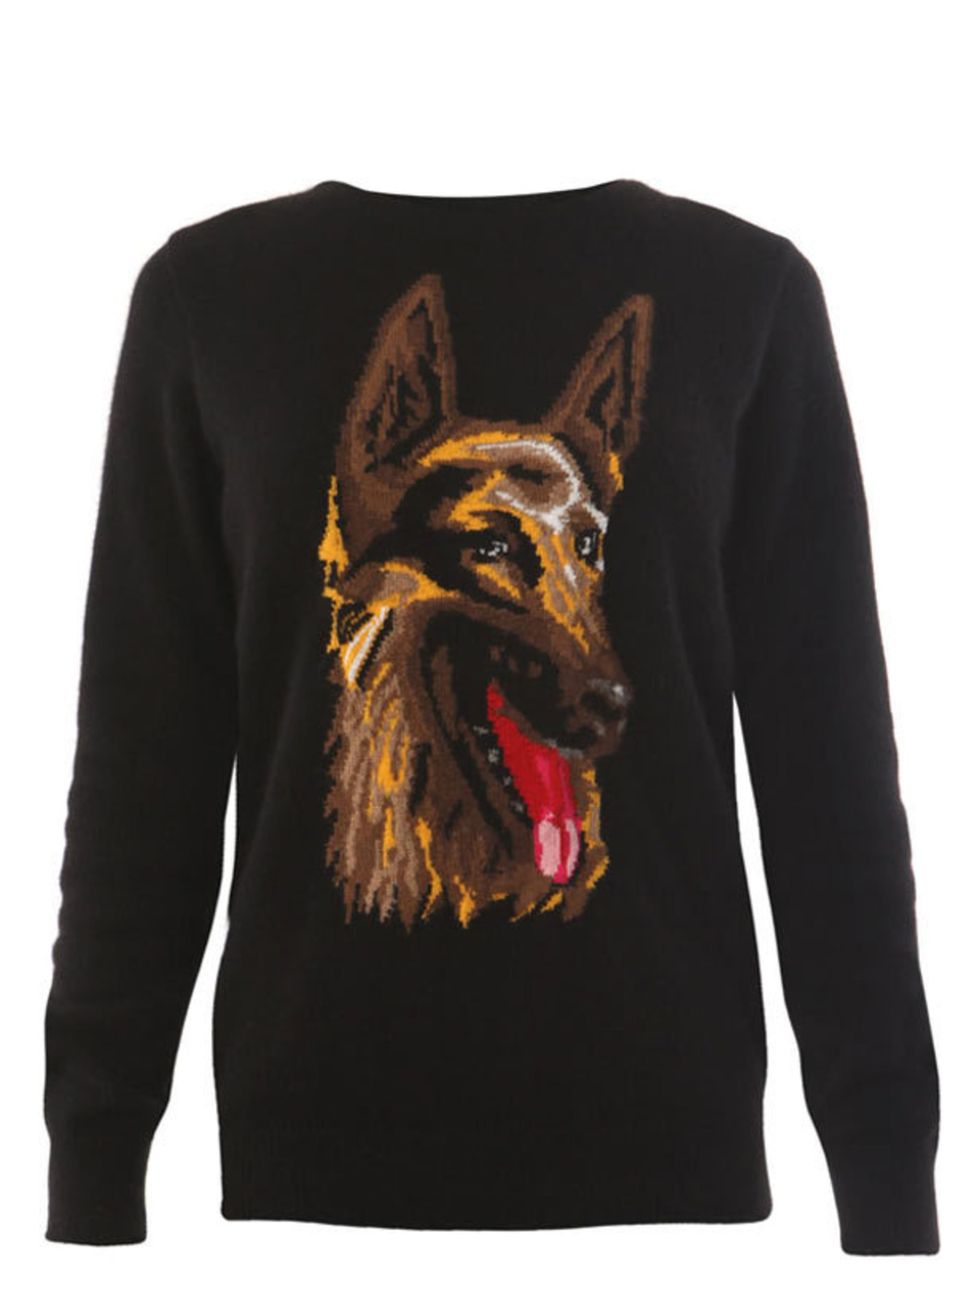 <p>Balenciaga 'The Dog Sweater', £525, at <a href="http://www.matchesfashion.com/fcp/product/Matches-Fashion/womens_balenciaga/balenciaga-BAL-B-273089-T1183-knitwear-BLACK/51661">Matches Fashion</a></p>